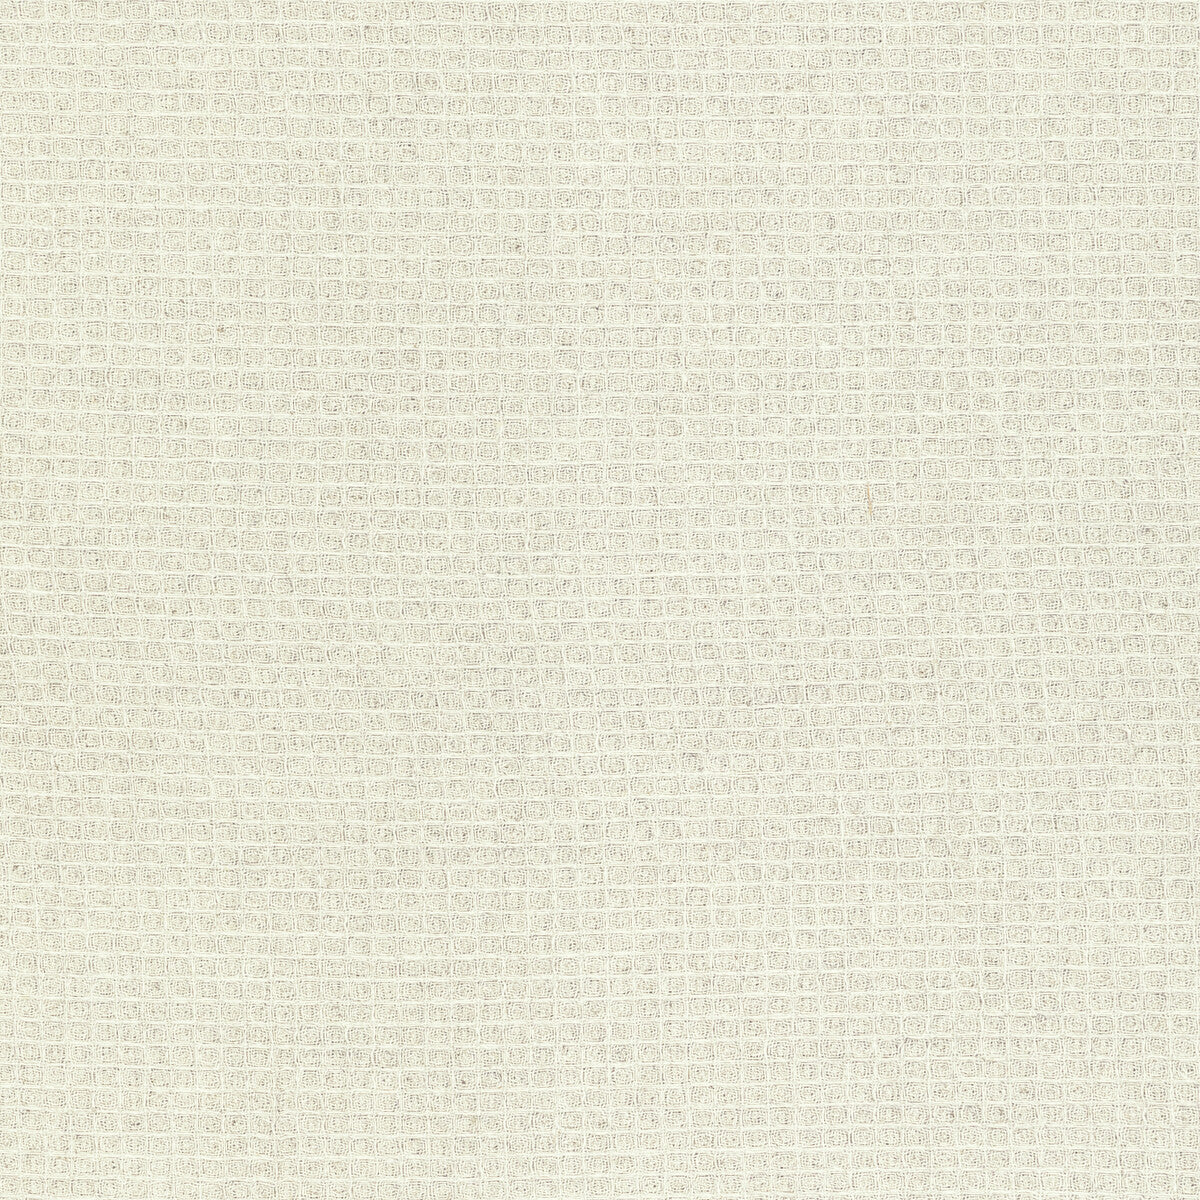 Kravet Basics fabric in 4807-1 color - pattern 4807.1.0 - by Kravet Basics in the Gis collection